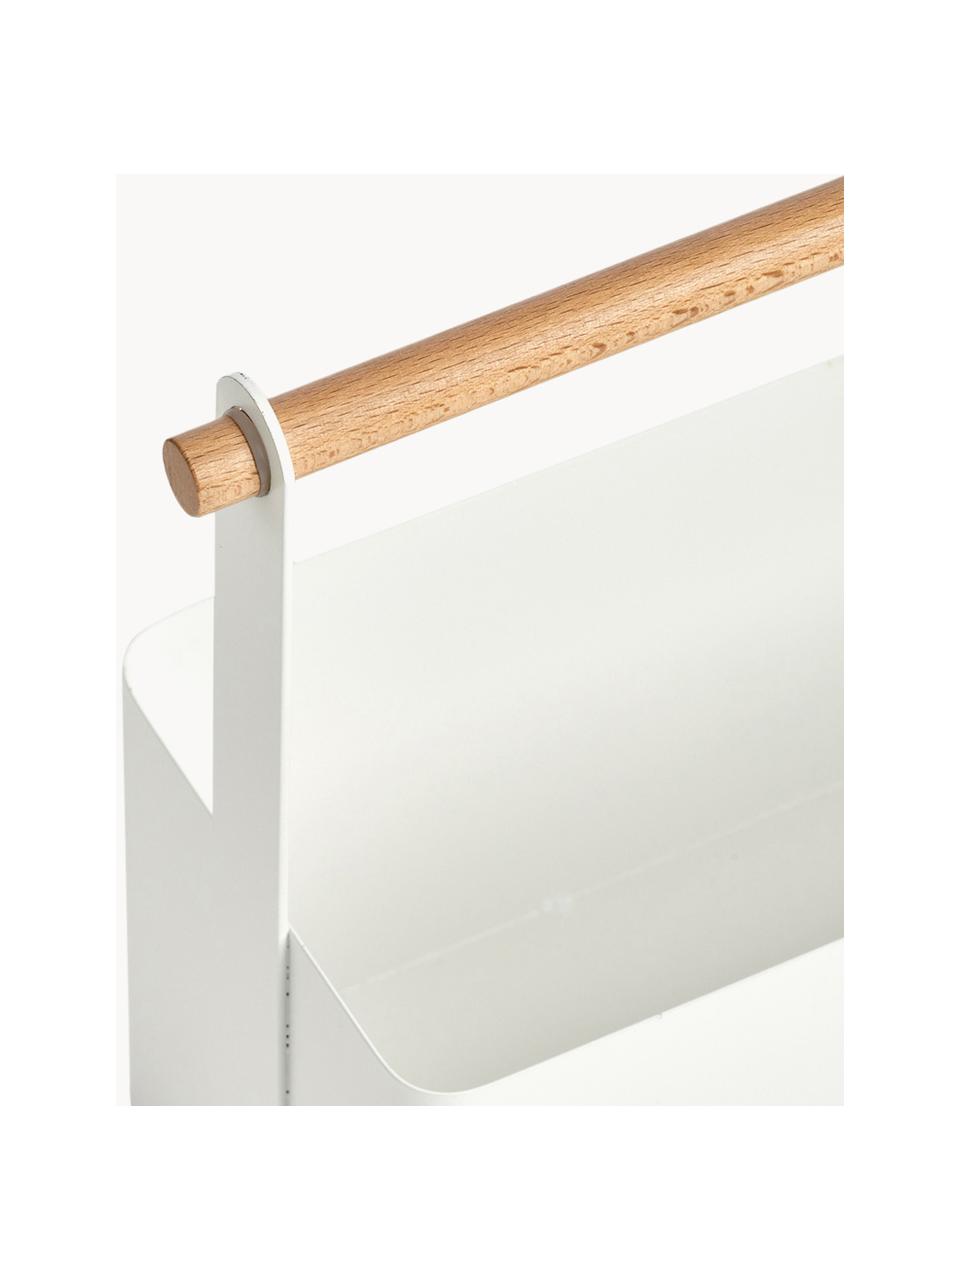 Panier de rangement Ledino, Blanc, bois clair, larg. 32 x haut. 24 cm